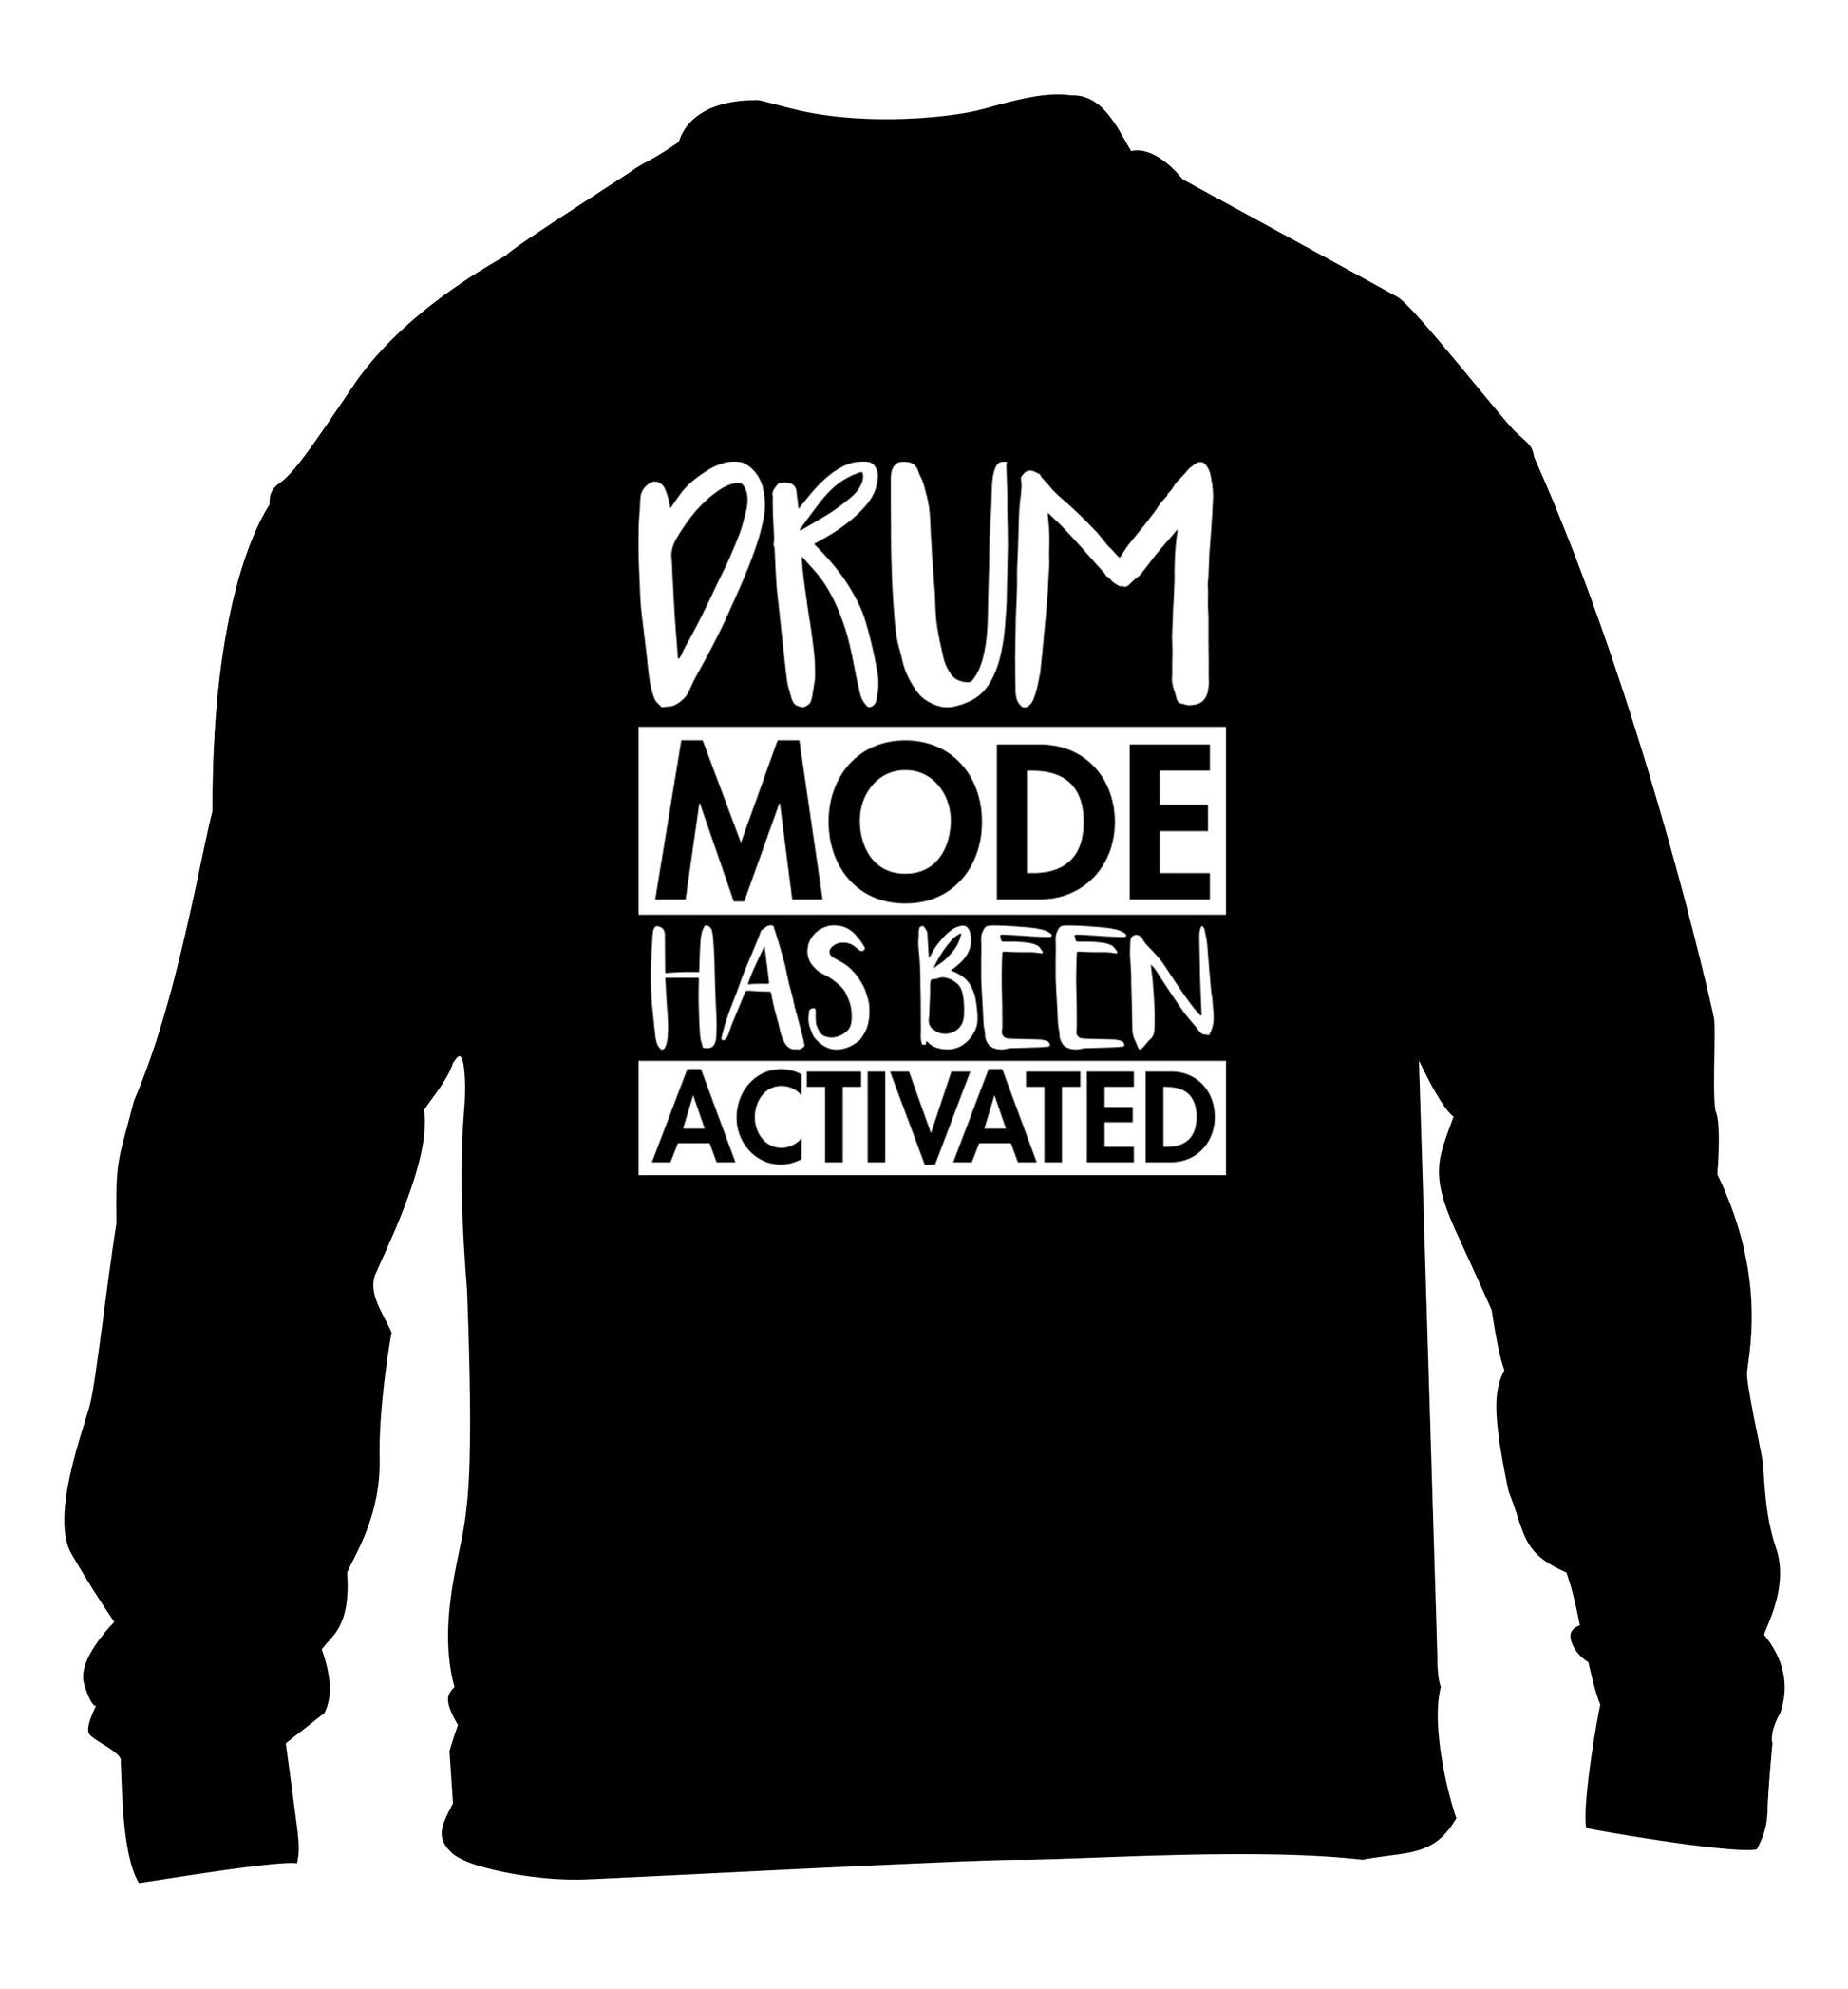 Drum mode activated children's black sweater 12-14 Years